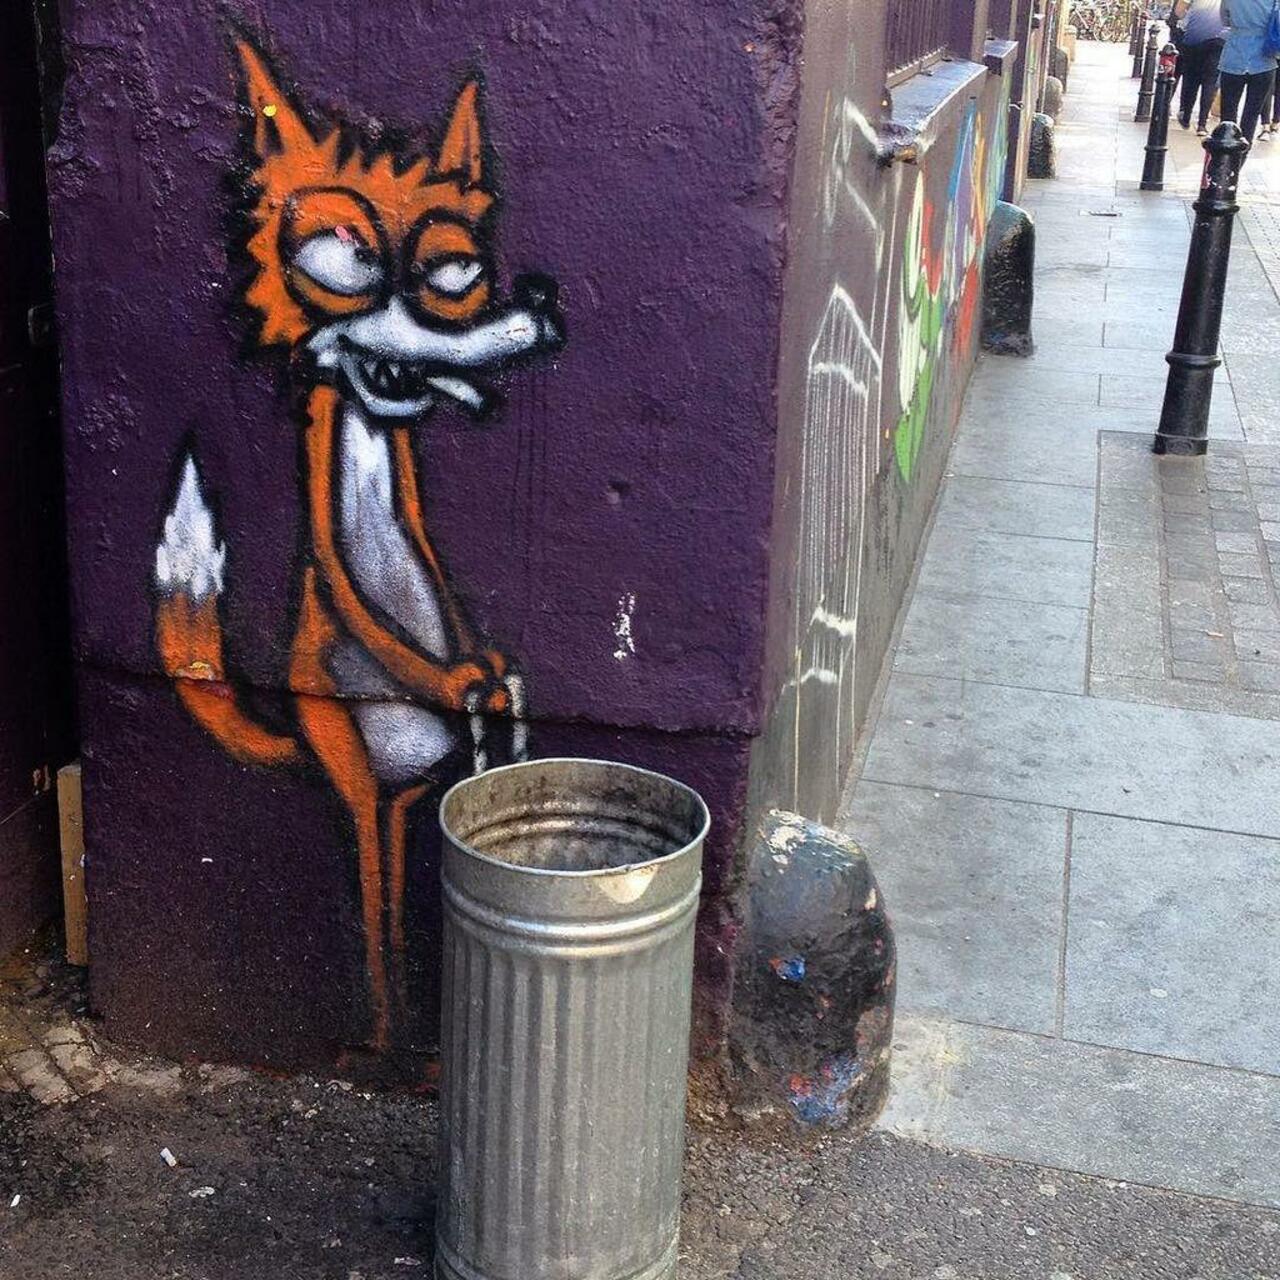 Fox. #streetart #streetartlondon #graffiti #london #thisislondon by isadarko http://t.co/ioqQRJ6O8i